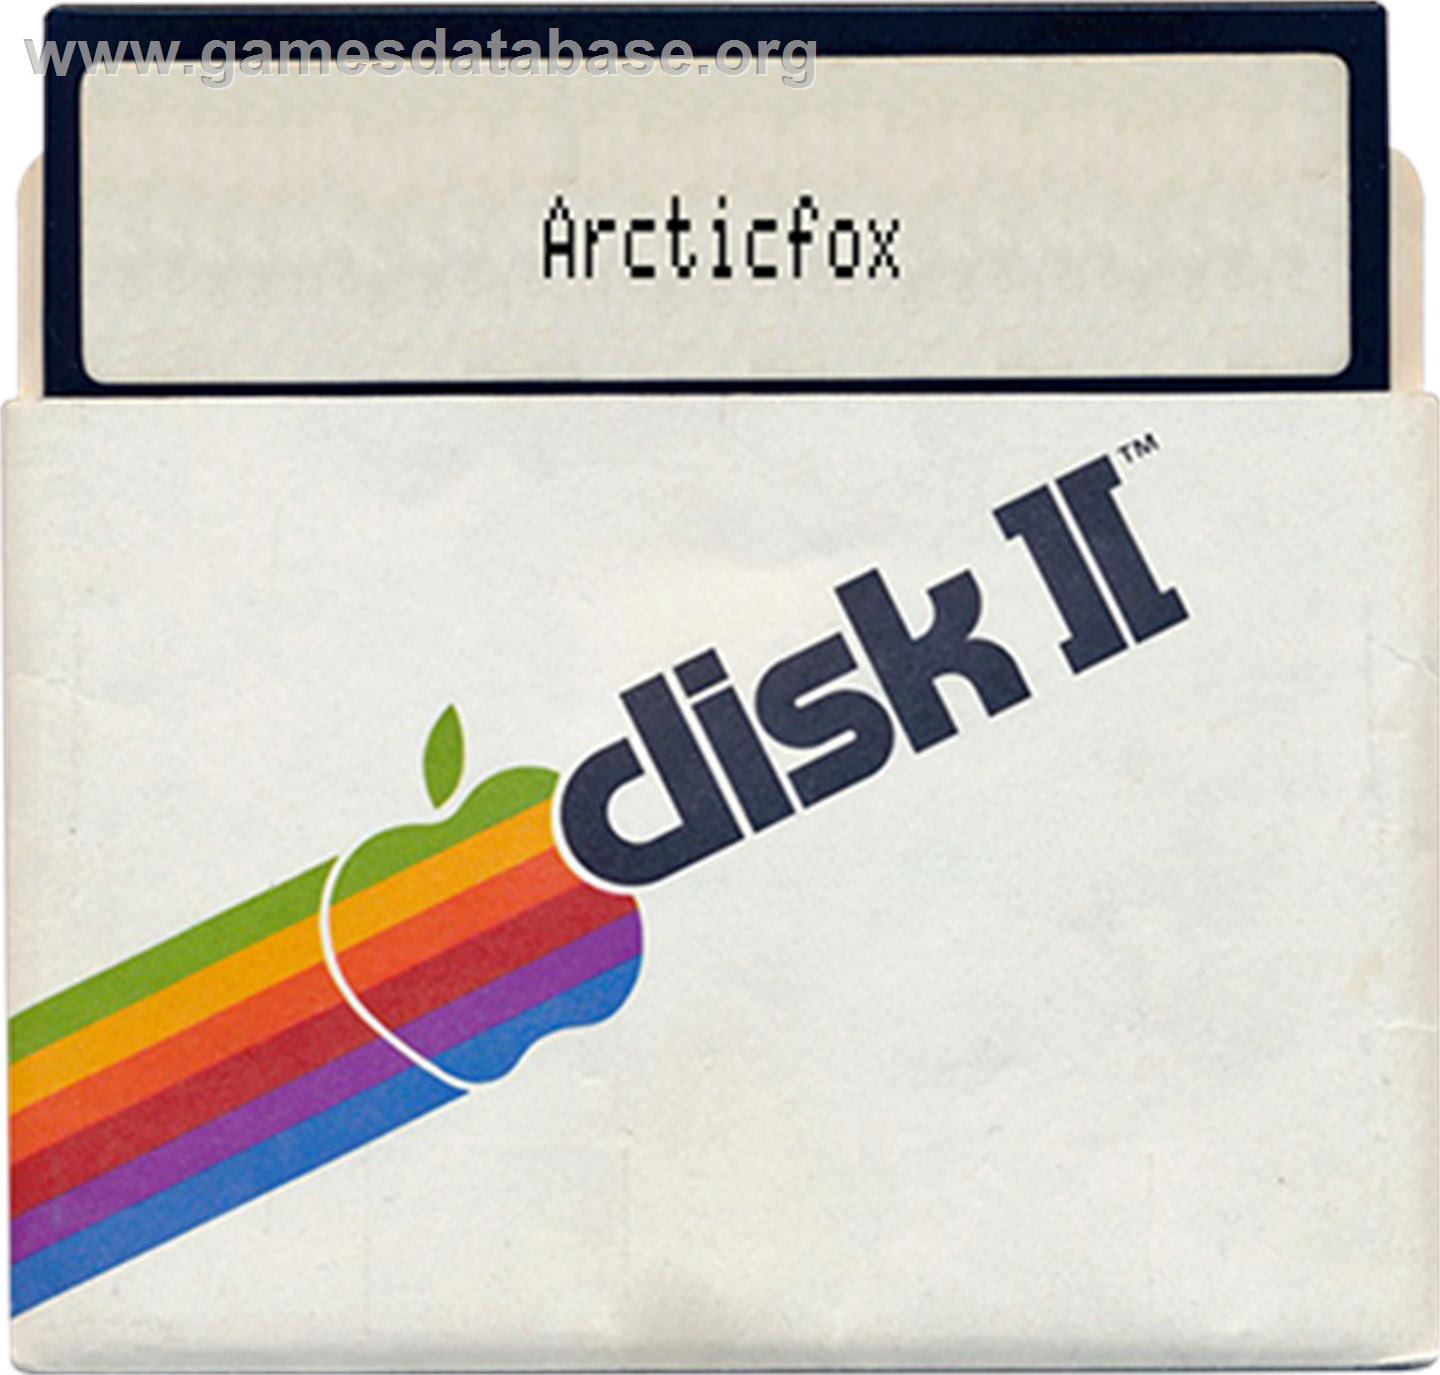 Arcticfox - Apple II - Artwork - Disc